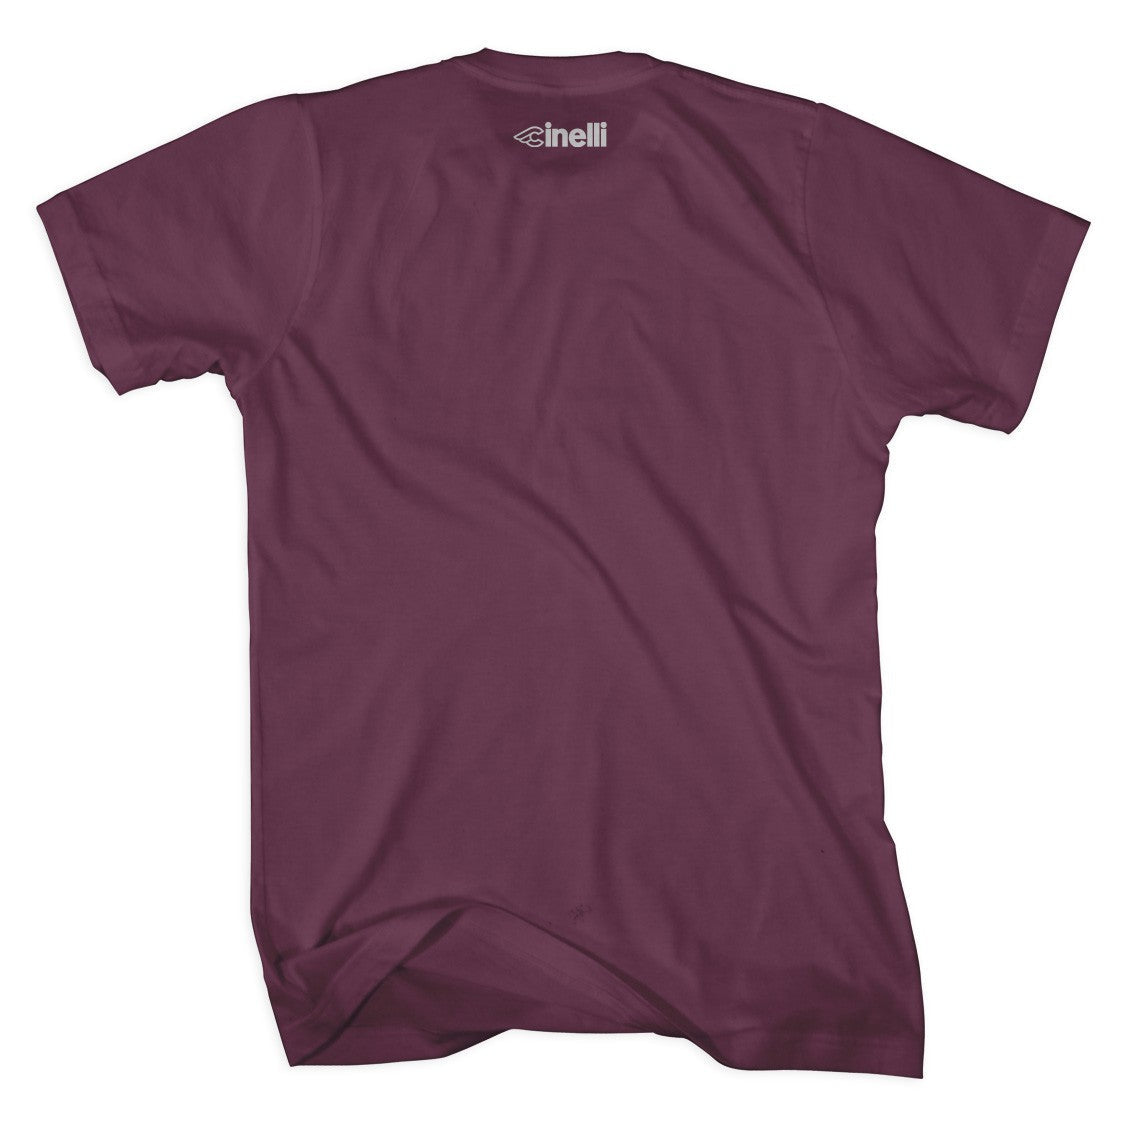 PIXEL BIKE 'LASER' BORDEAUX TSHIRT, T-Shirt, IMG.2